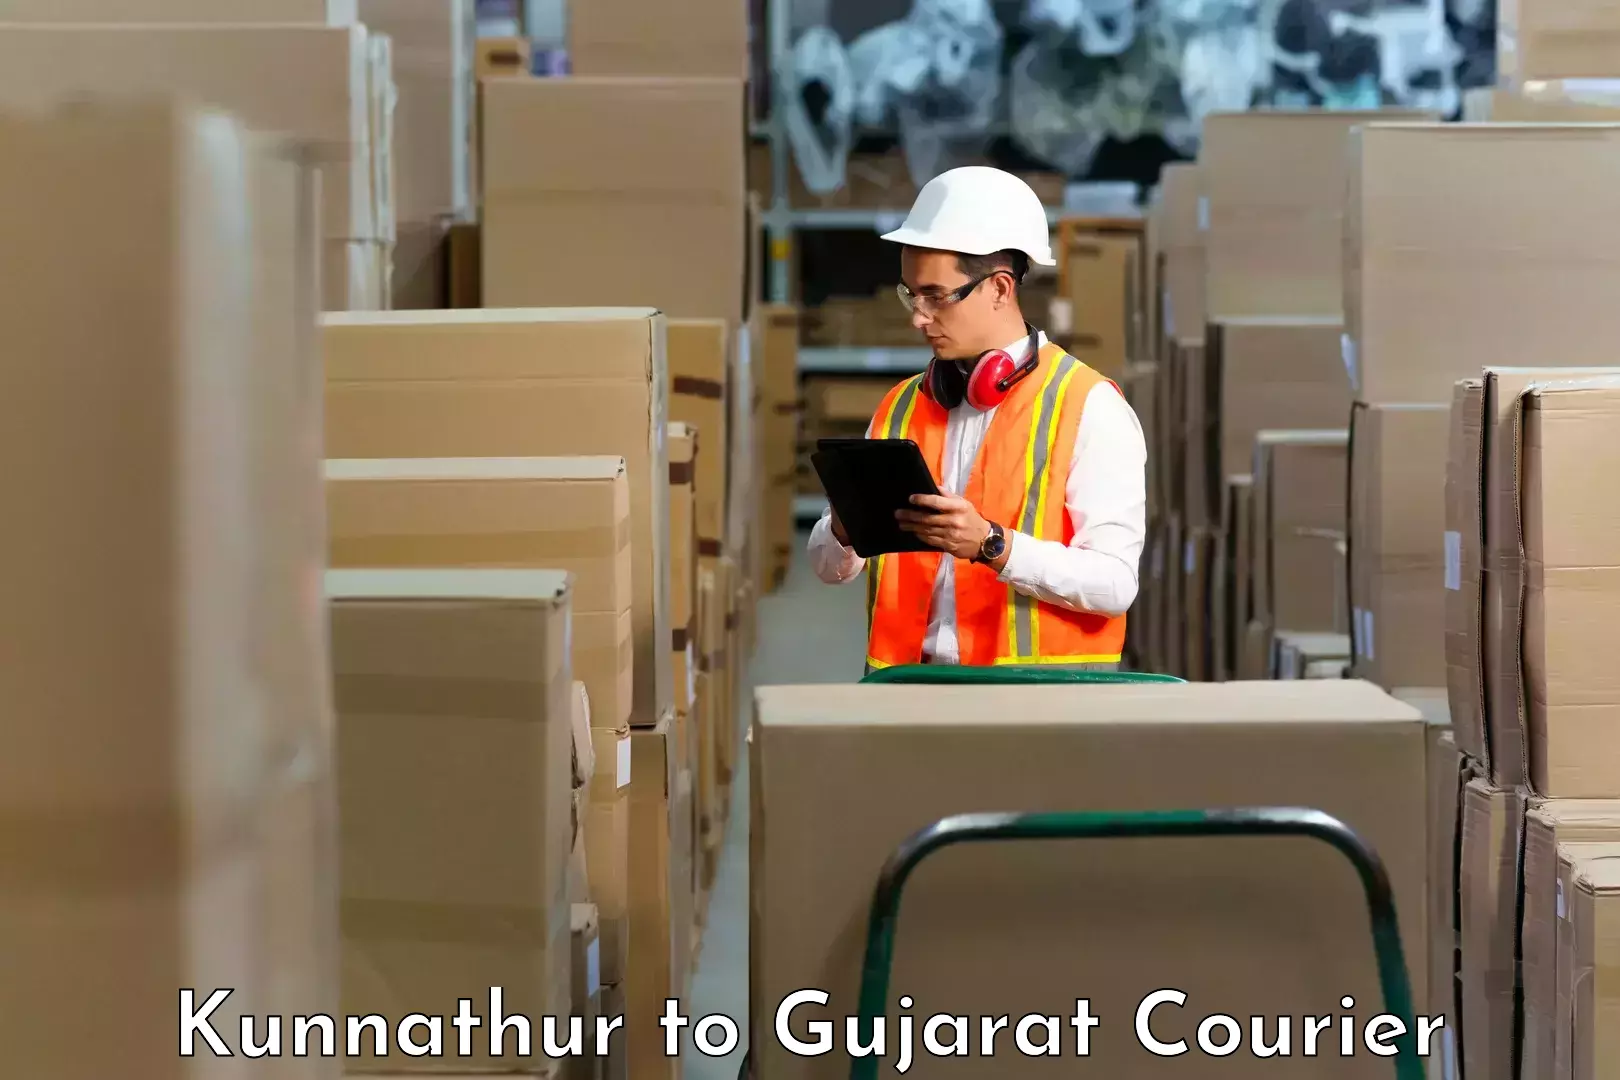 Reliable delivery network Kunnathur to Ambaji